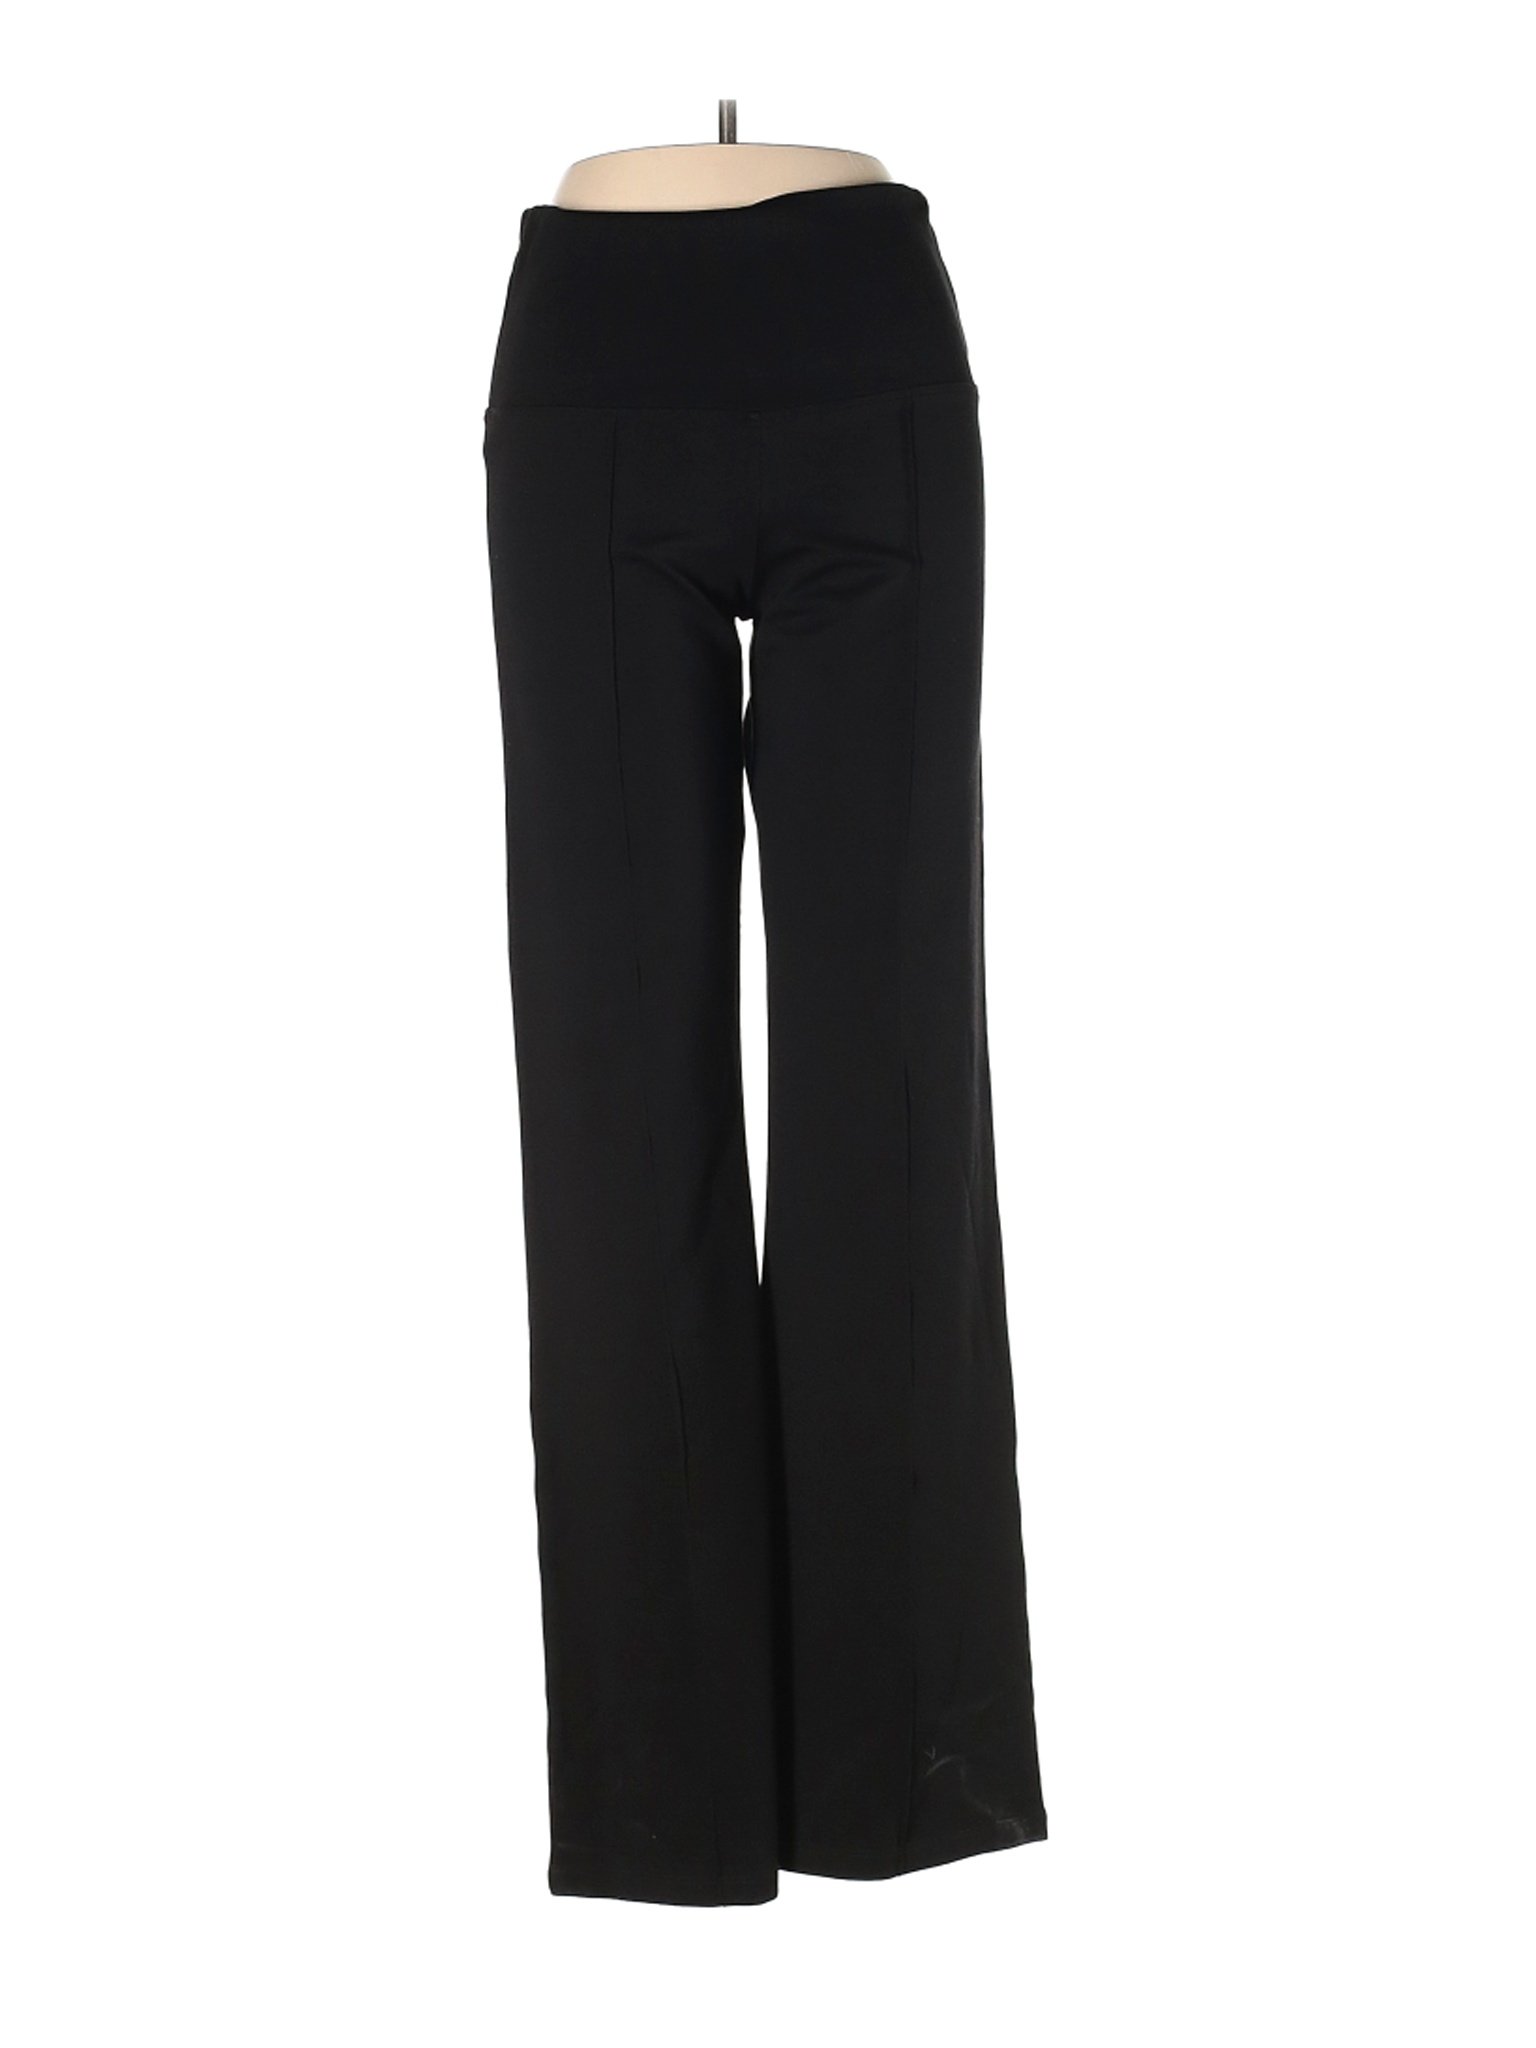 Athena Marie Women Black Casual Pants M | eBay